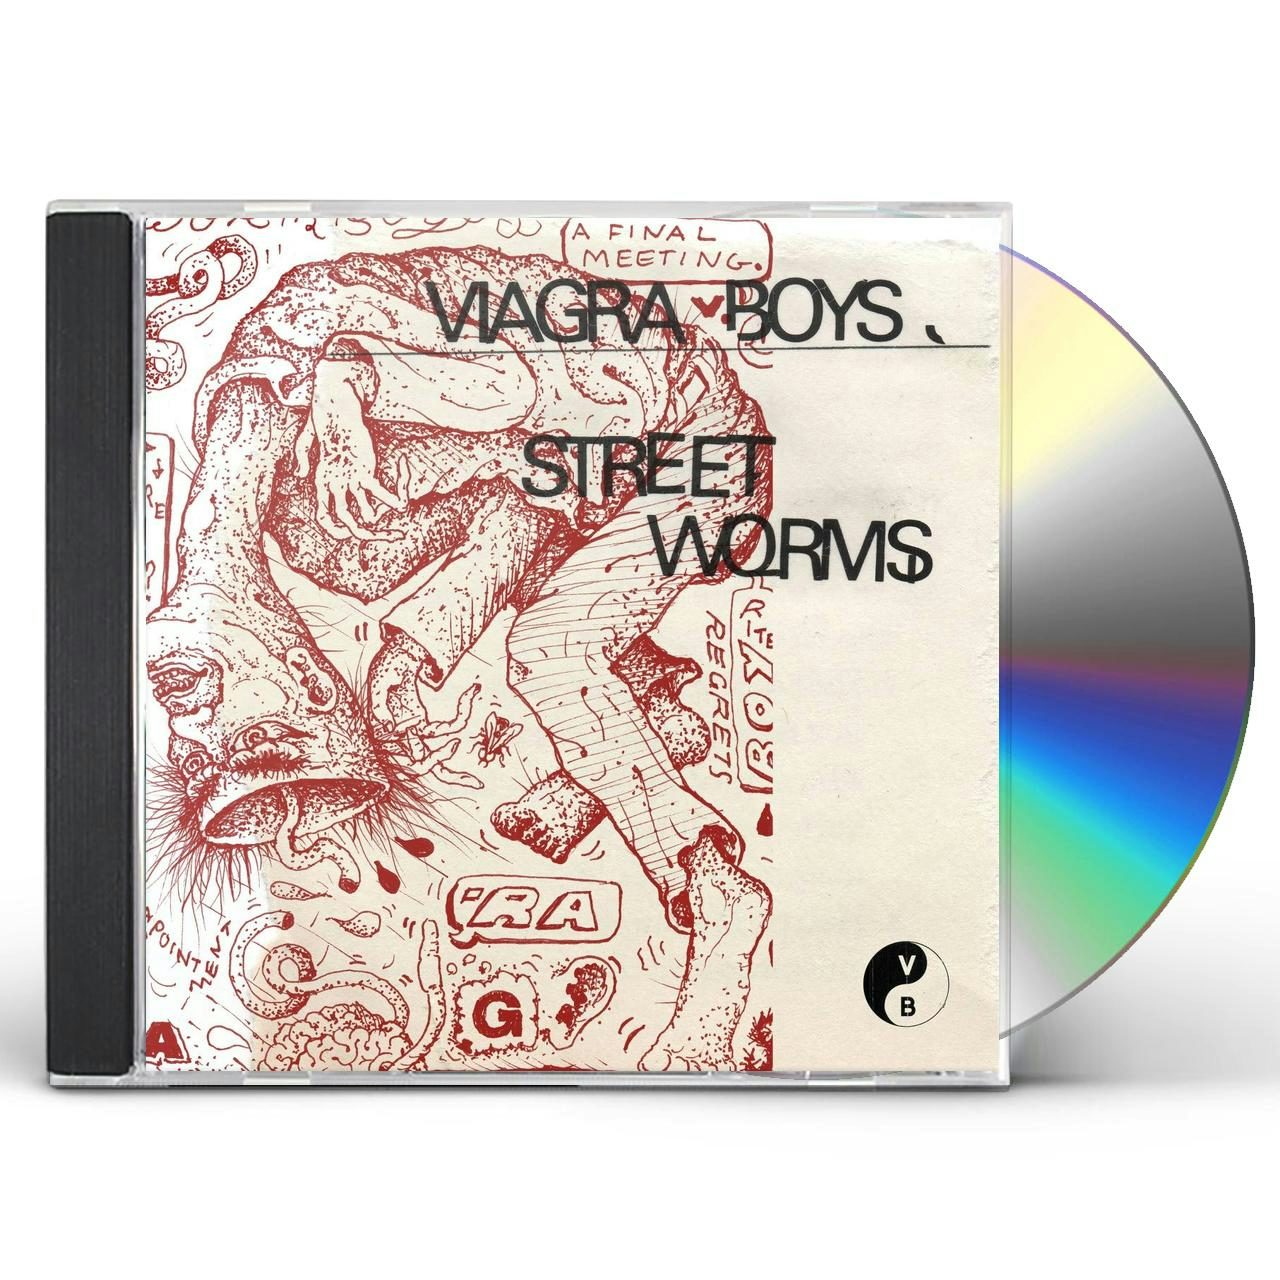 street worms cd - Viagra Boys